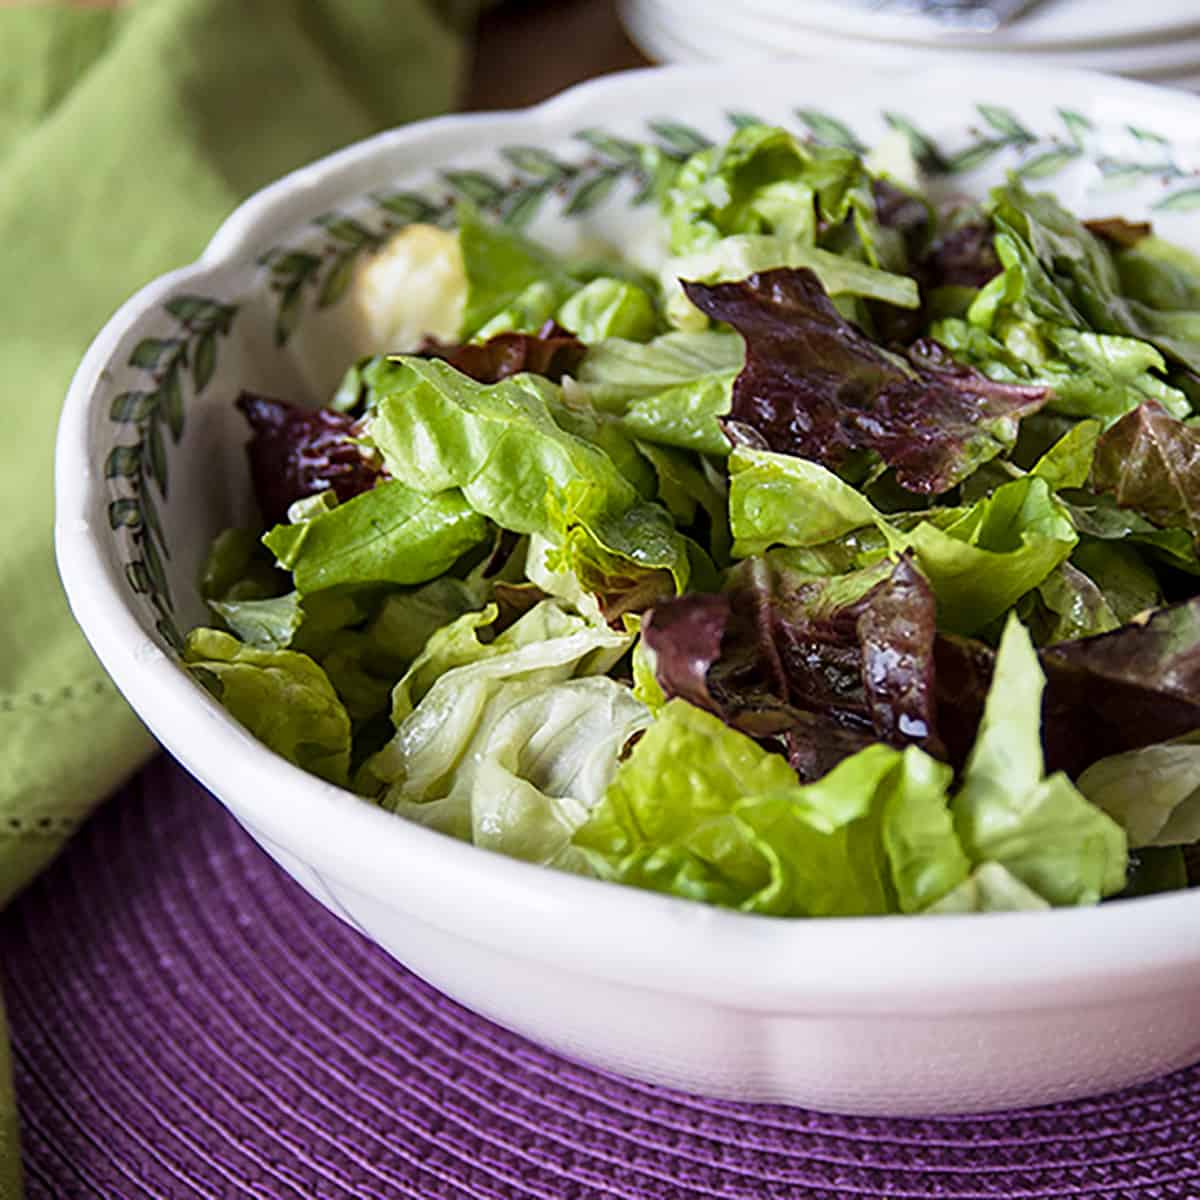 https://cookingwithmammac.com/wp-content/uploads/2022/06/1200-The-Best-Italian-Green-Salad.jpg